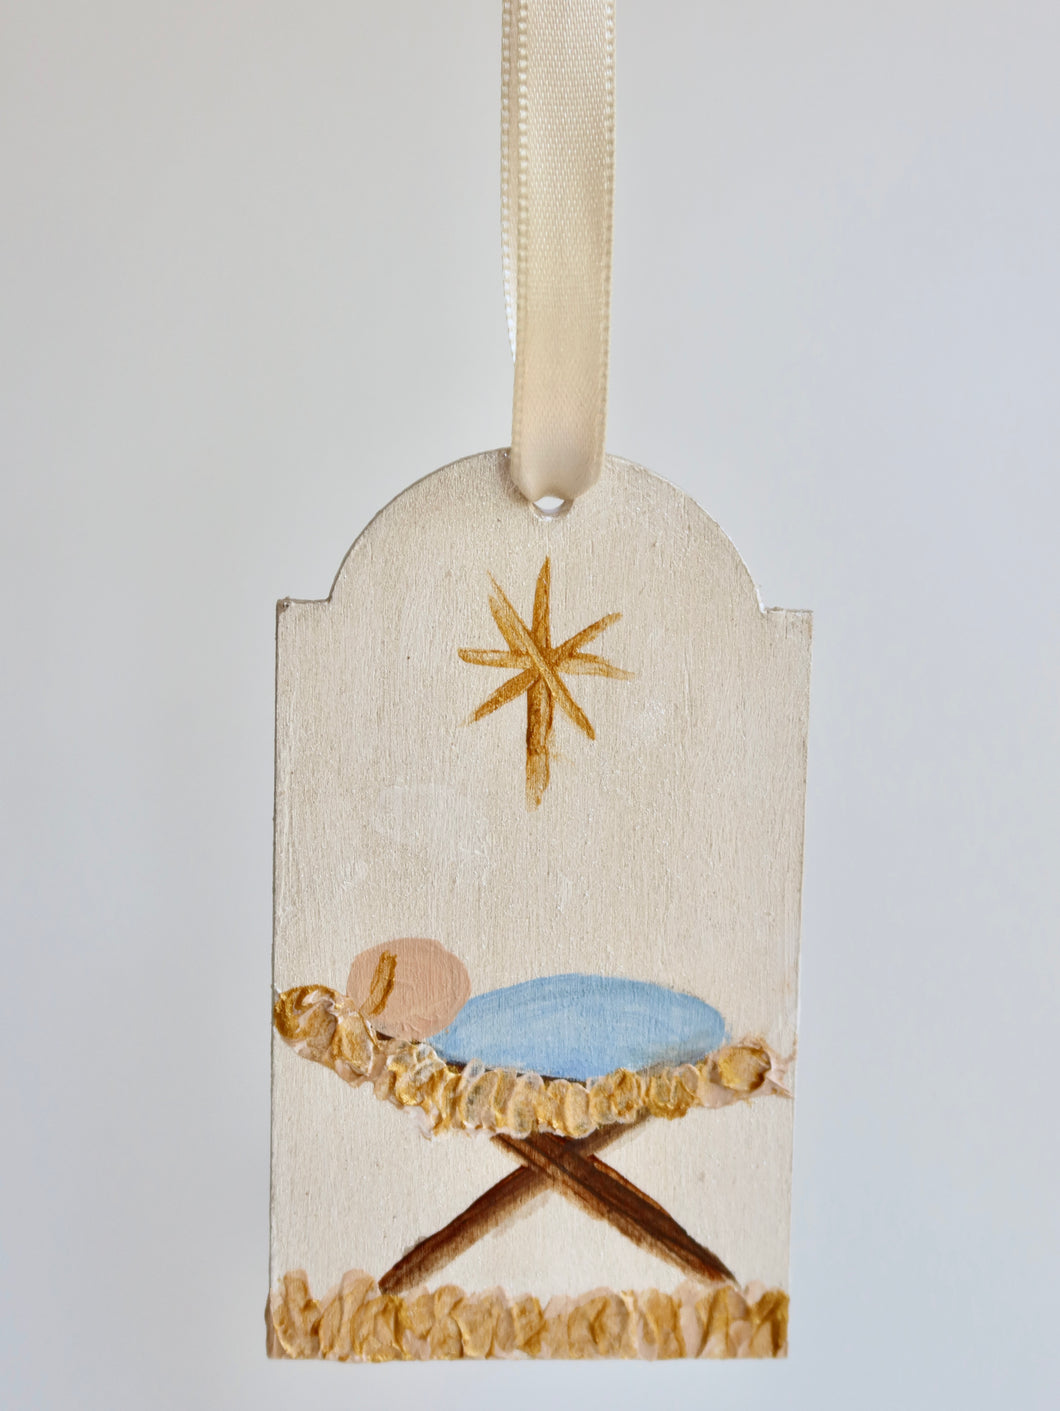 Nativity Ornament